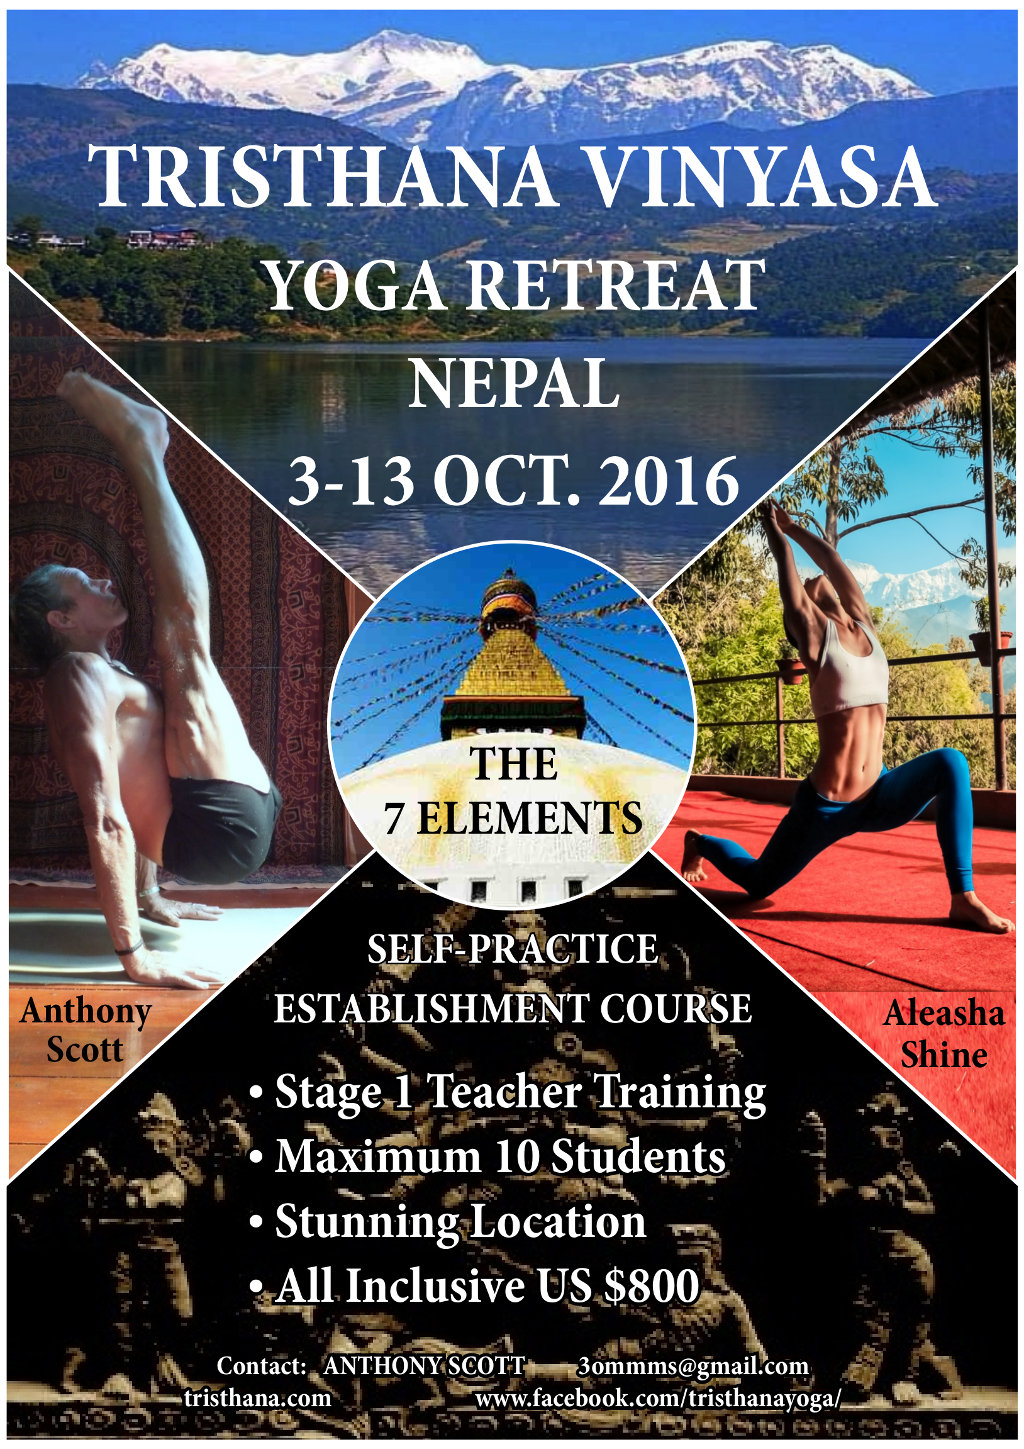 Yoga retreat Nepal 3-13 OCT. 2016. Self-practice establishment
course: stage 1 teacher training, maximum 10 students, stunning location, all
inclusive US $800. Contact Anthony Scott, 3ommms@gmail.com, tristhana.com,
www.facebook.com/tristhanayoga/. With Anthony Scott and Aleasha Shine.